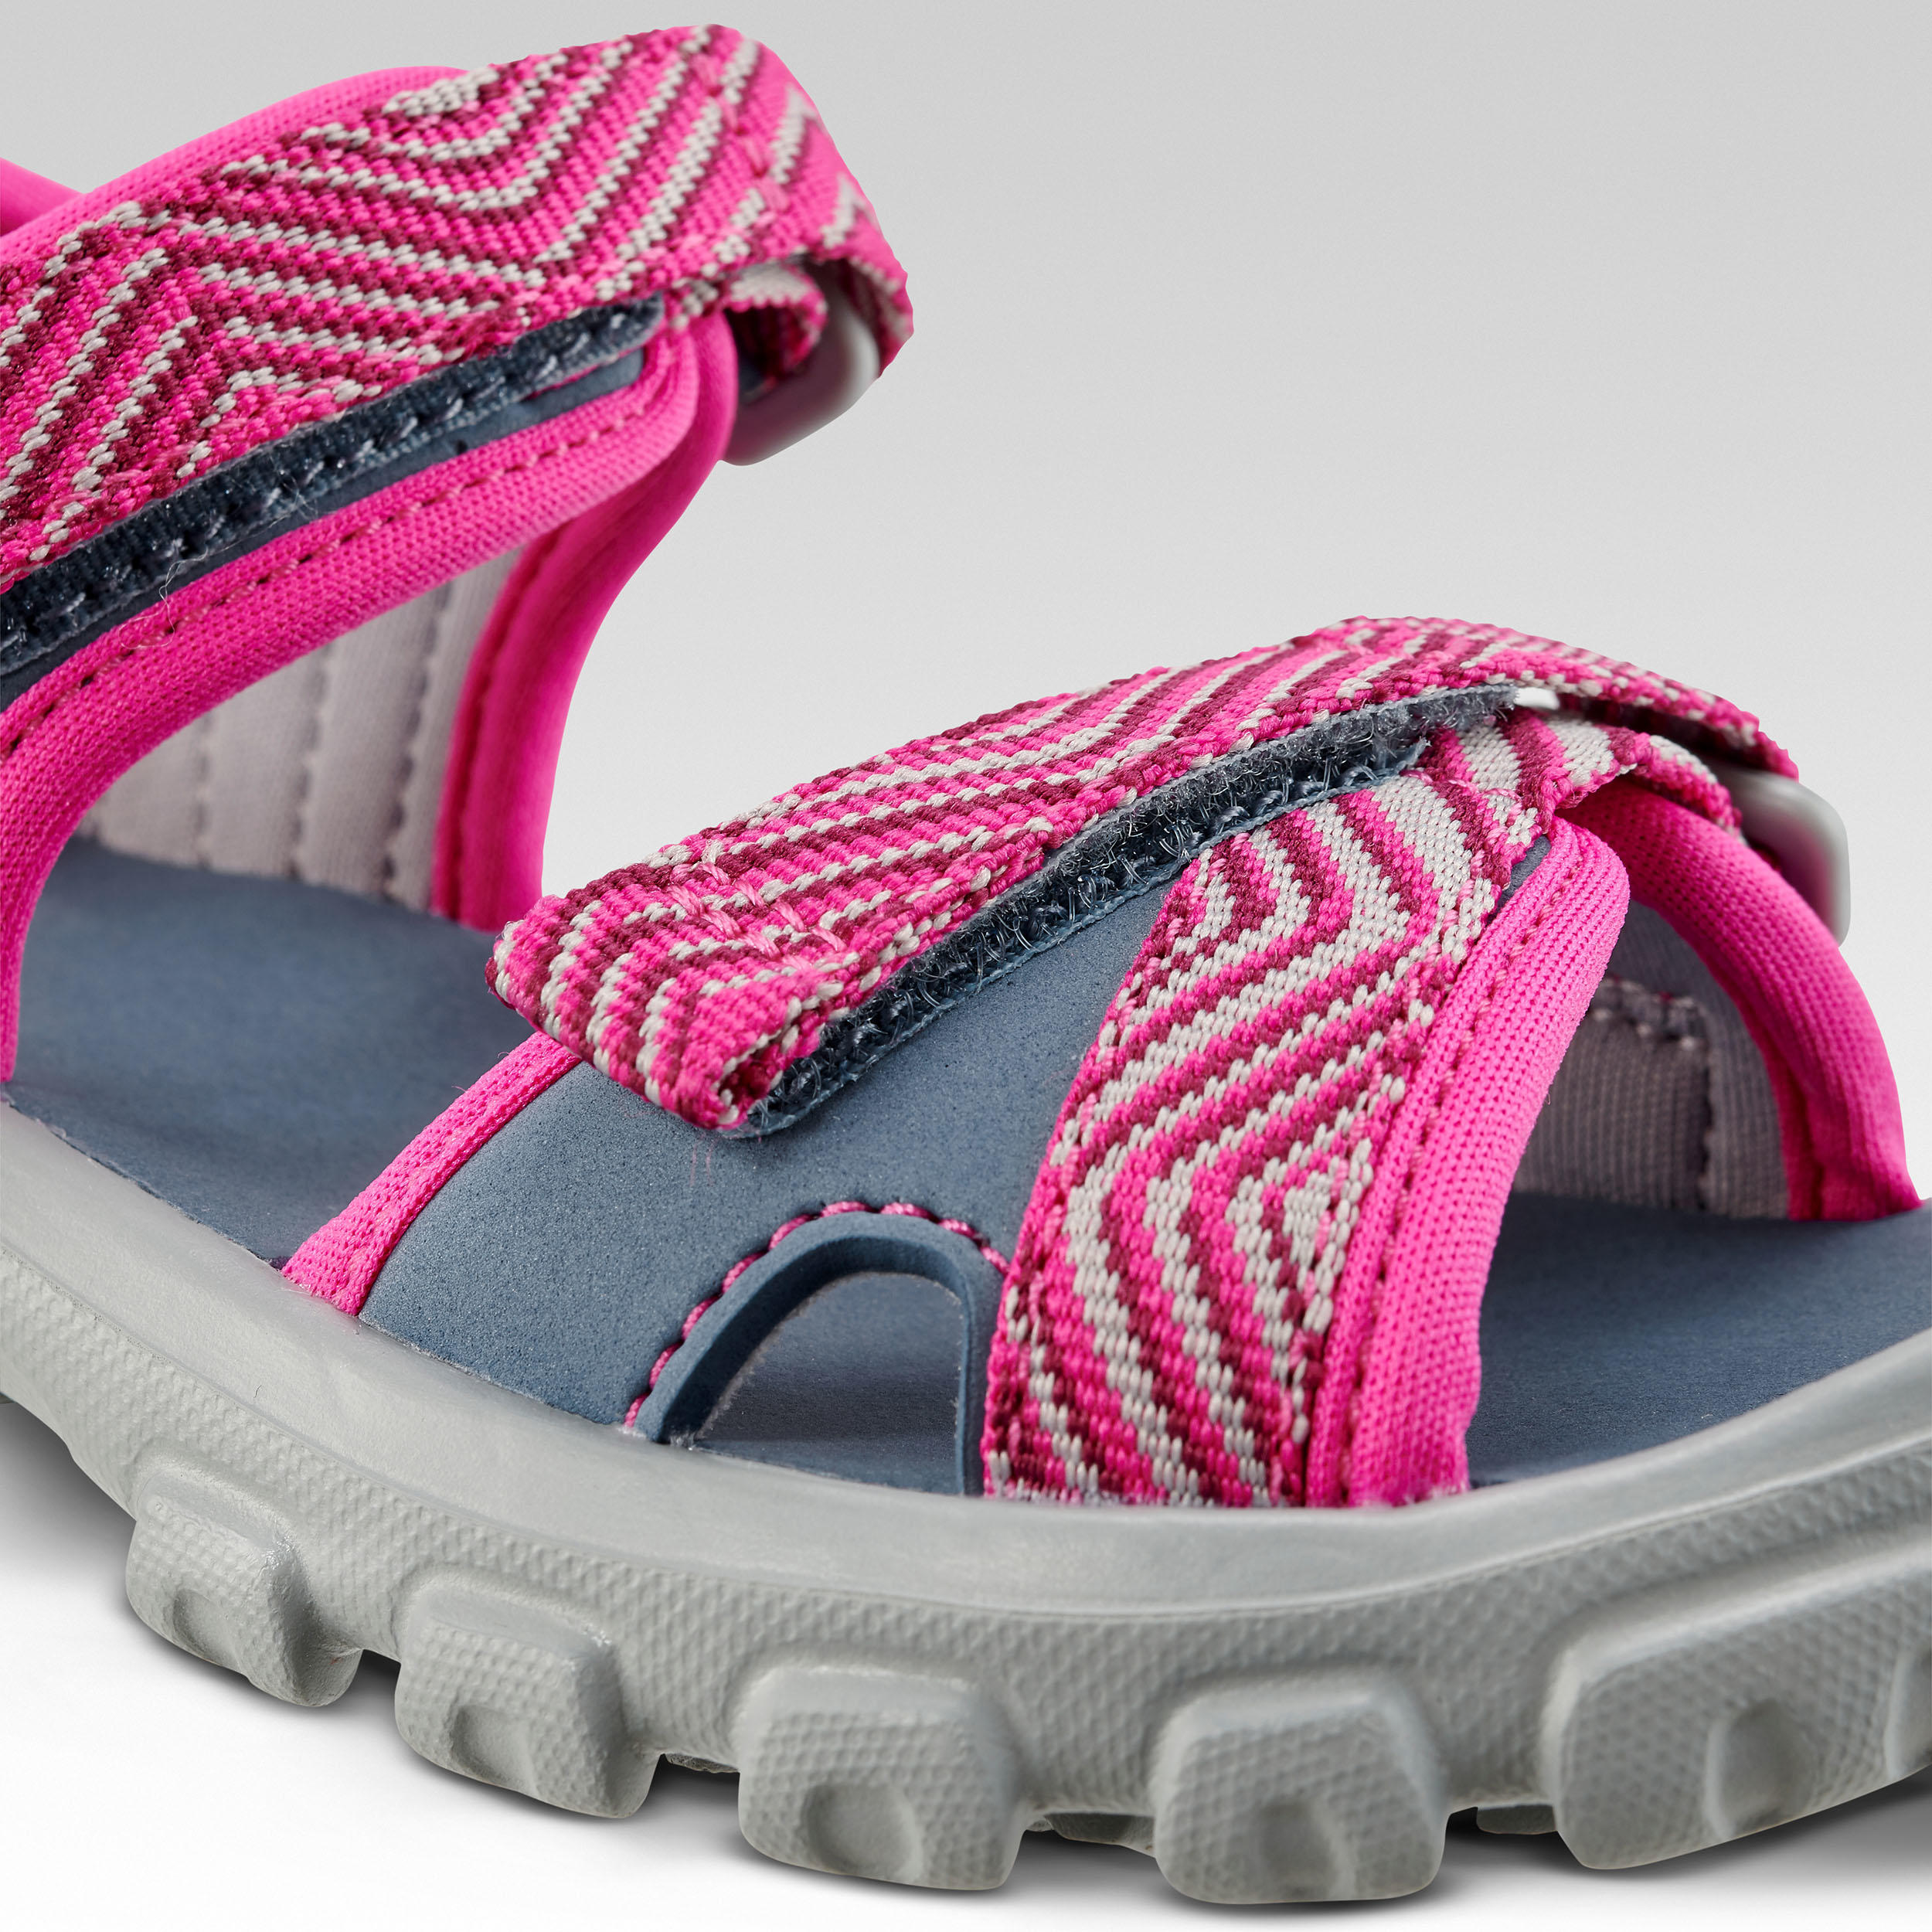 Hiking sandals MH100 KID blue pink - children - Jr size 7 TO 12.5 6/6